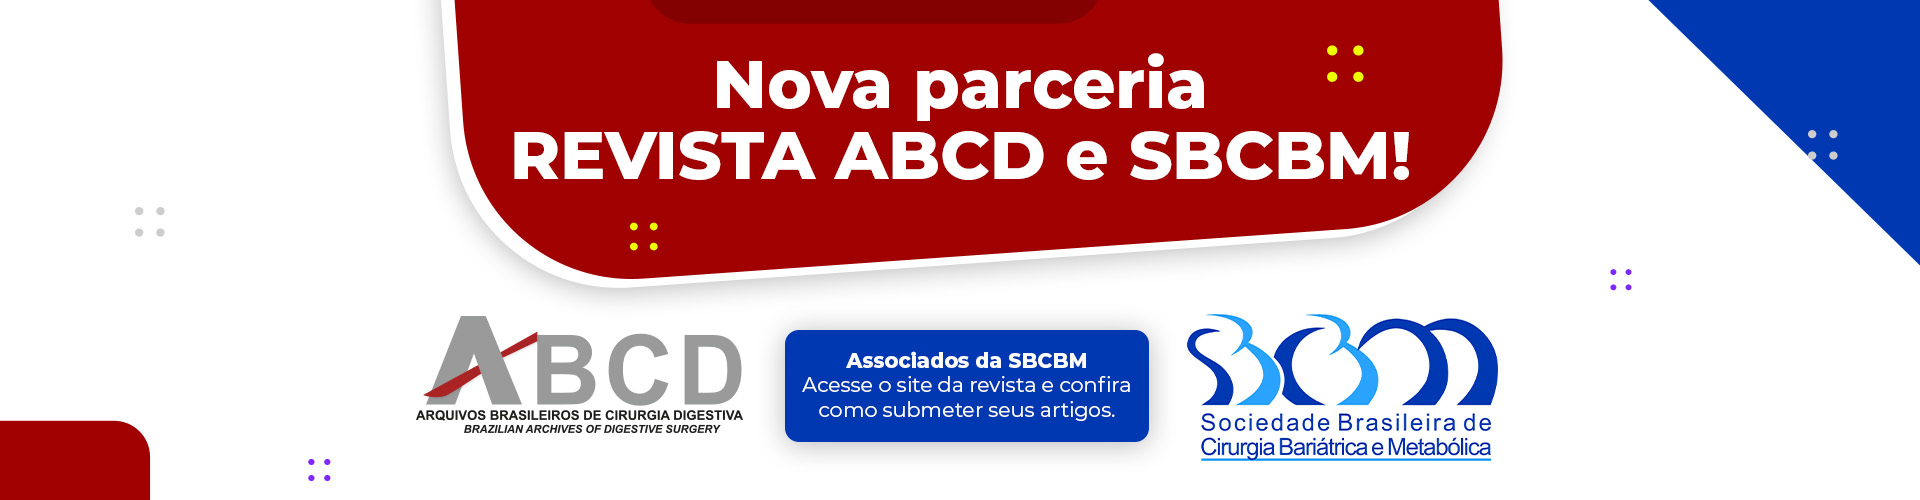 Nova parceria revista ABCD e SBCBM